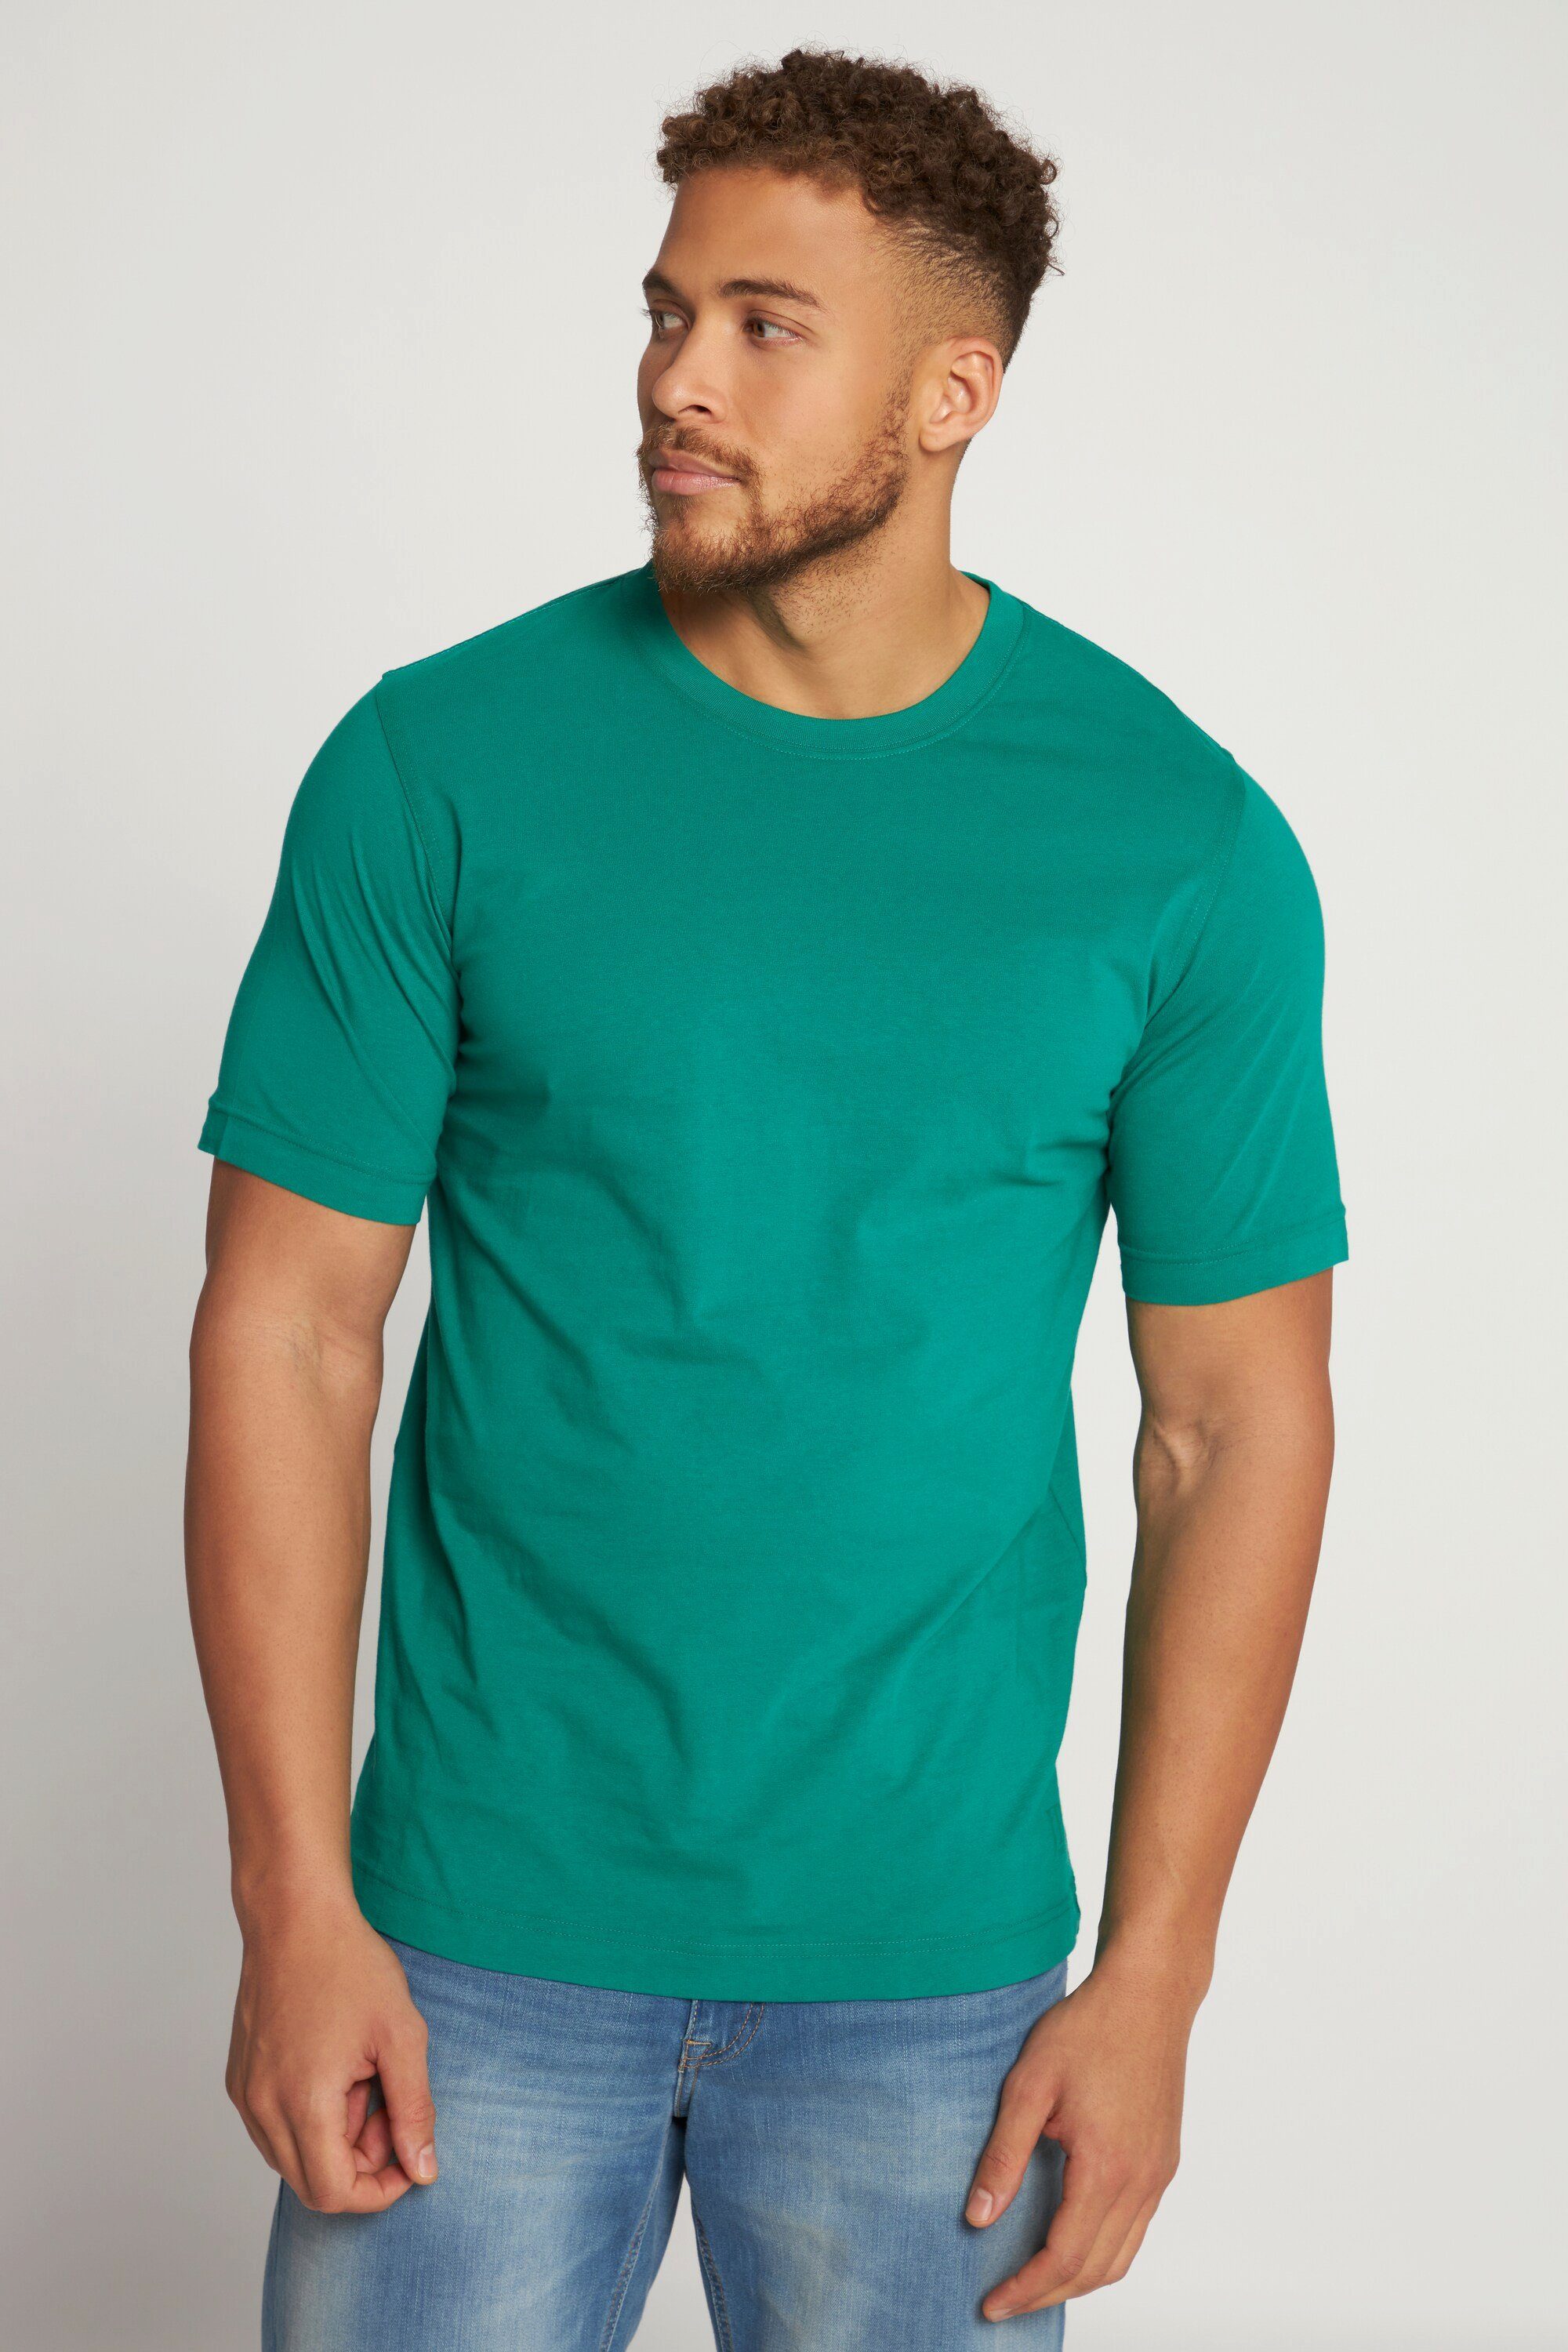 gekämmte bis flaschengrün JP1880 Rundhals Basic Baumwolle T-Shirt 8XL T-Shirt